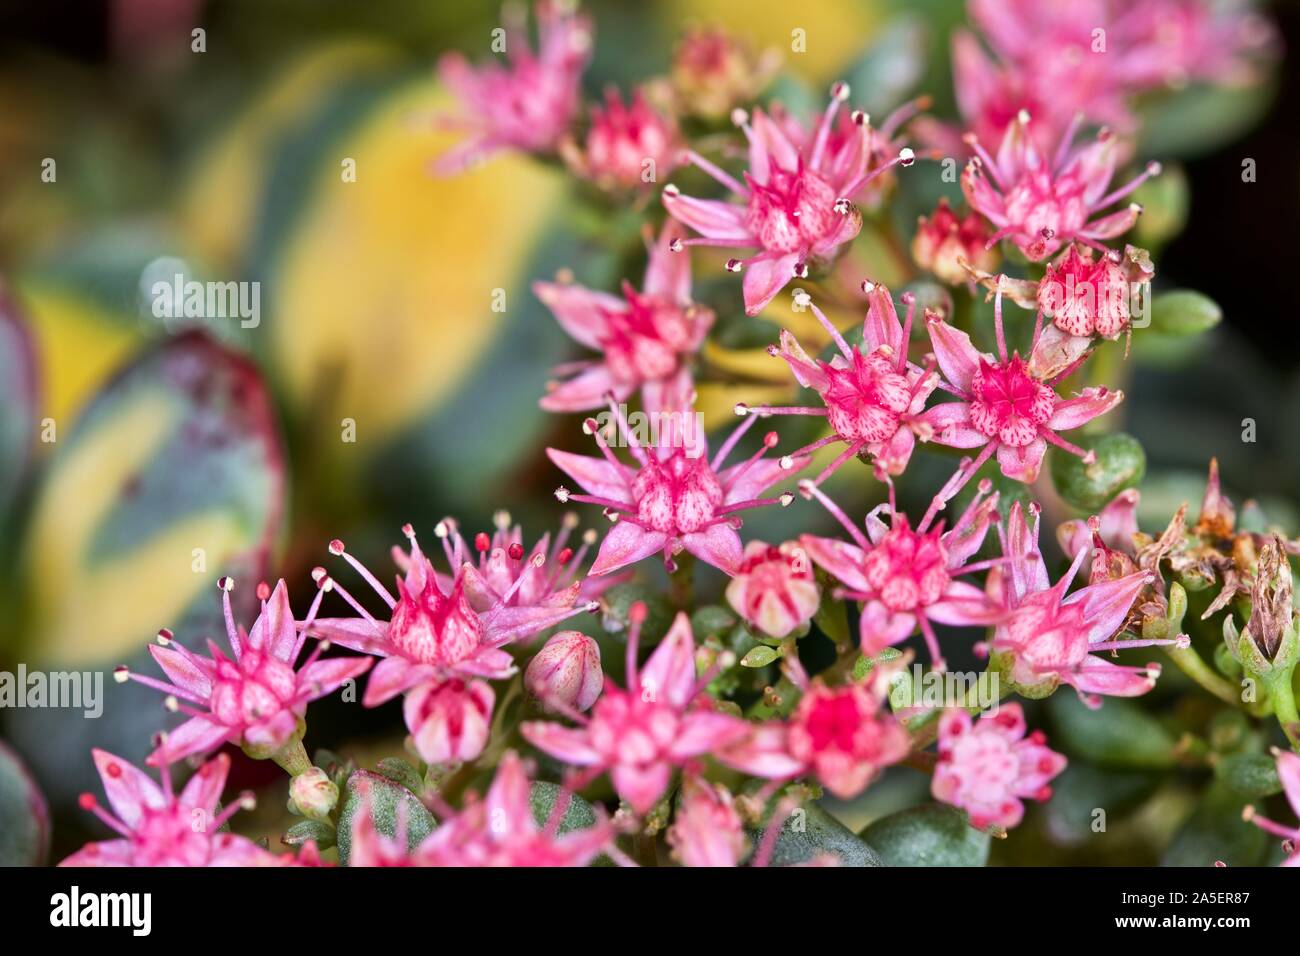 Beautiful pink star-shaped flowers of a Sedum Stock Photo